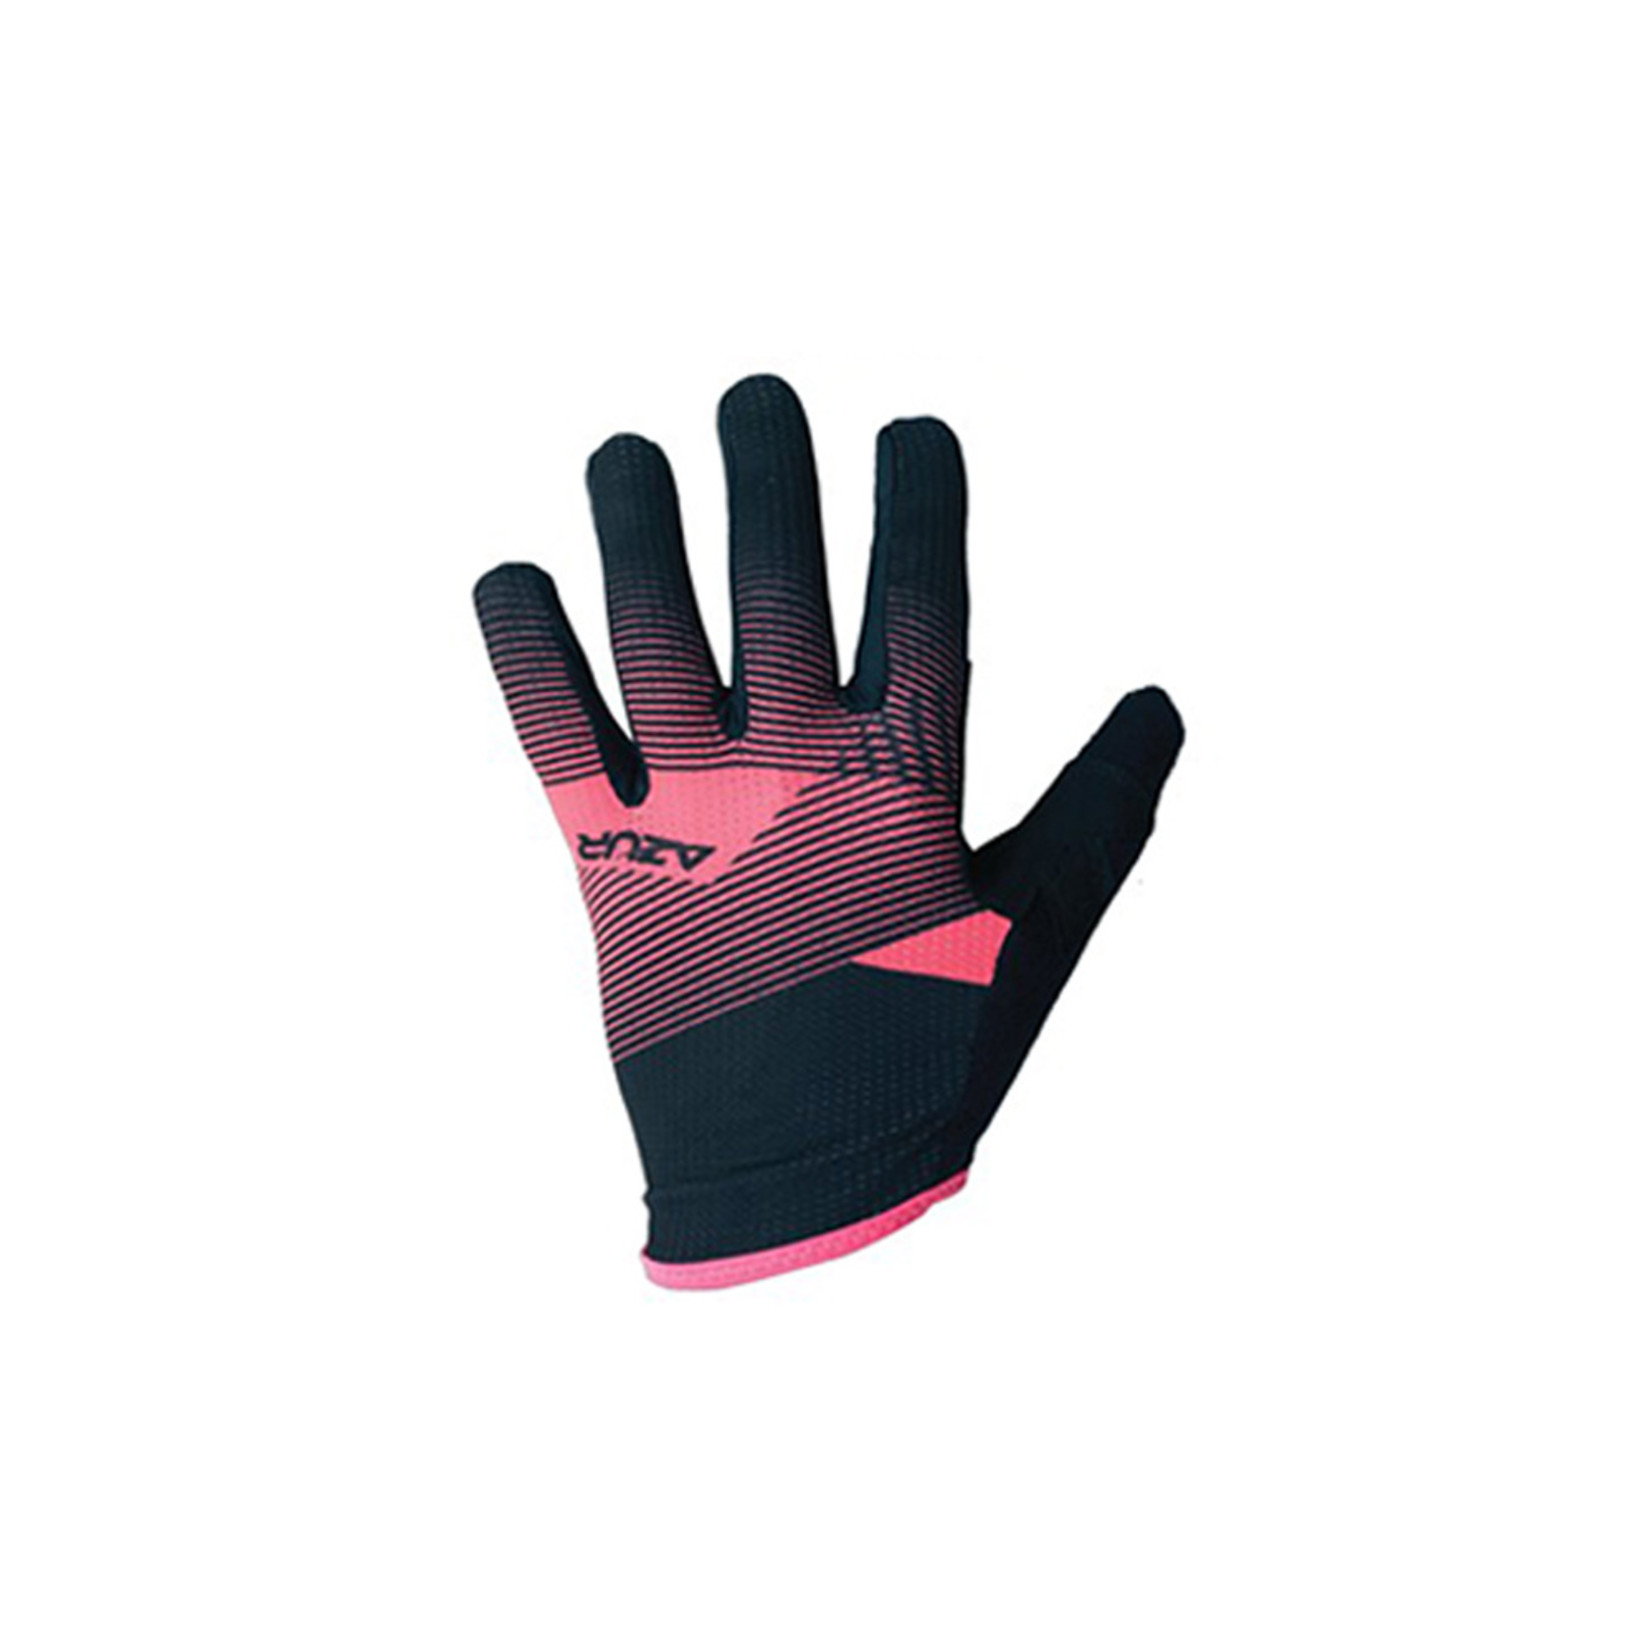 Azur Azur Bike/Cycling Gloves - L60 Series - Peach - X-Small Material Breathable